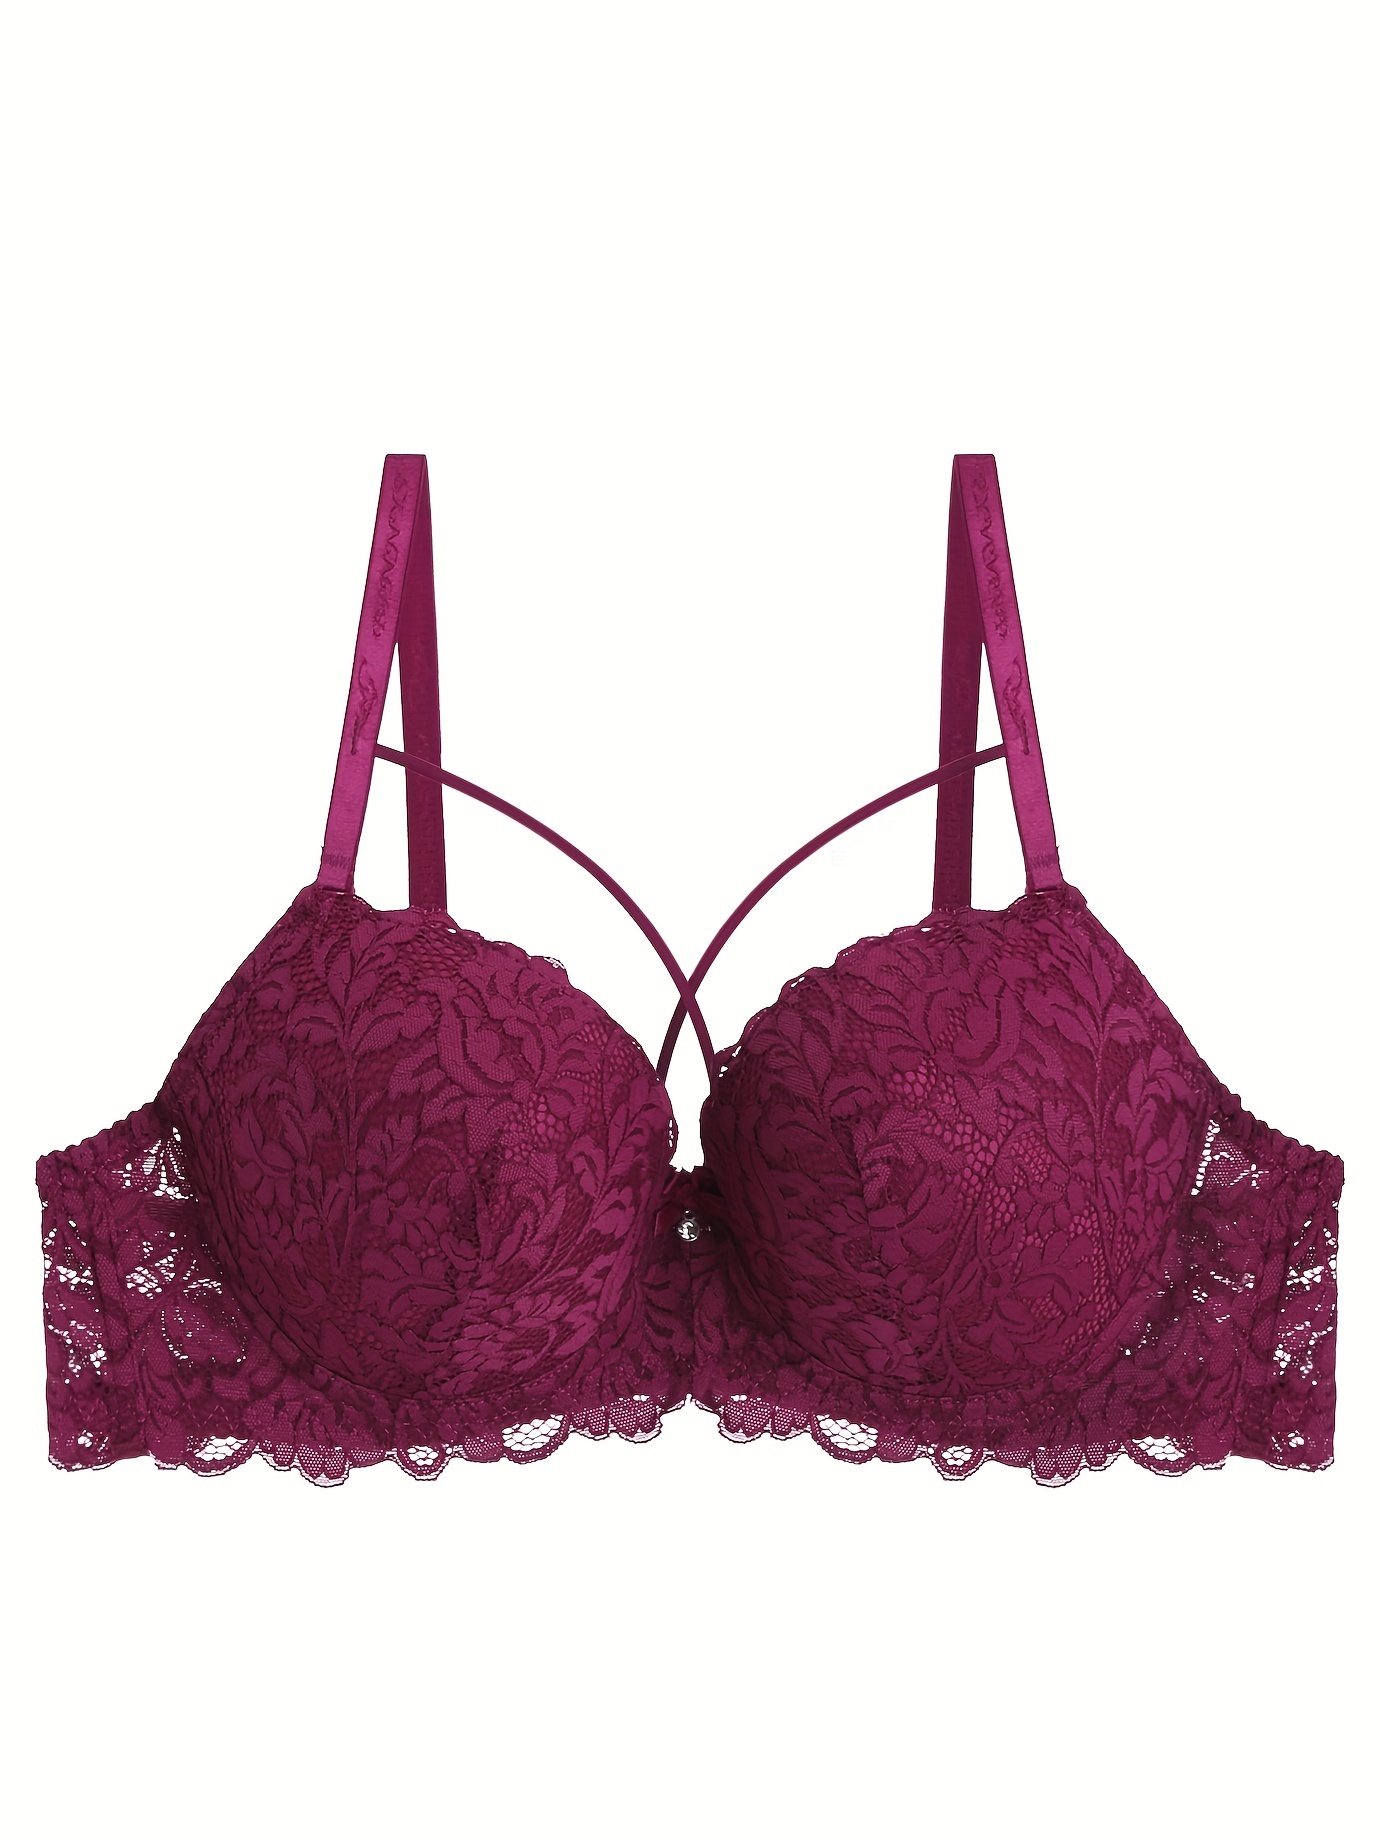 Elegant Burgundy Lace Push-up Bra by Victoria's Secret